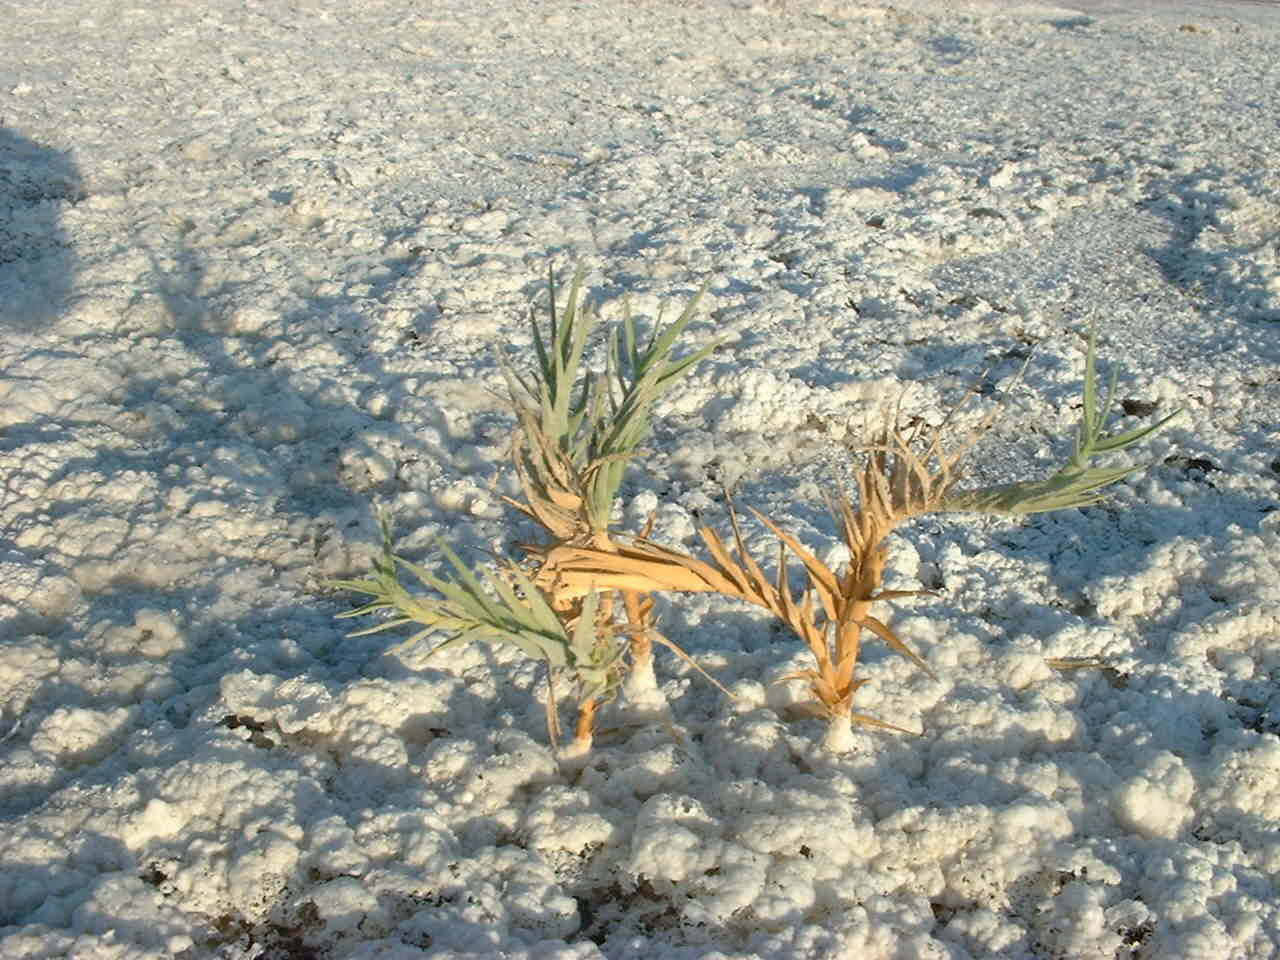 Vegetation surviving in the Badwater Basin Salt Flats of Death Valley